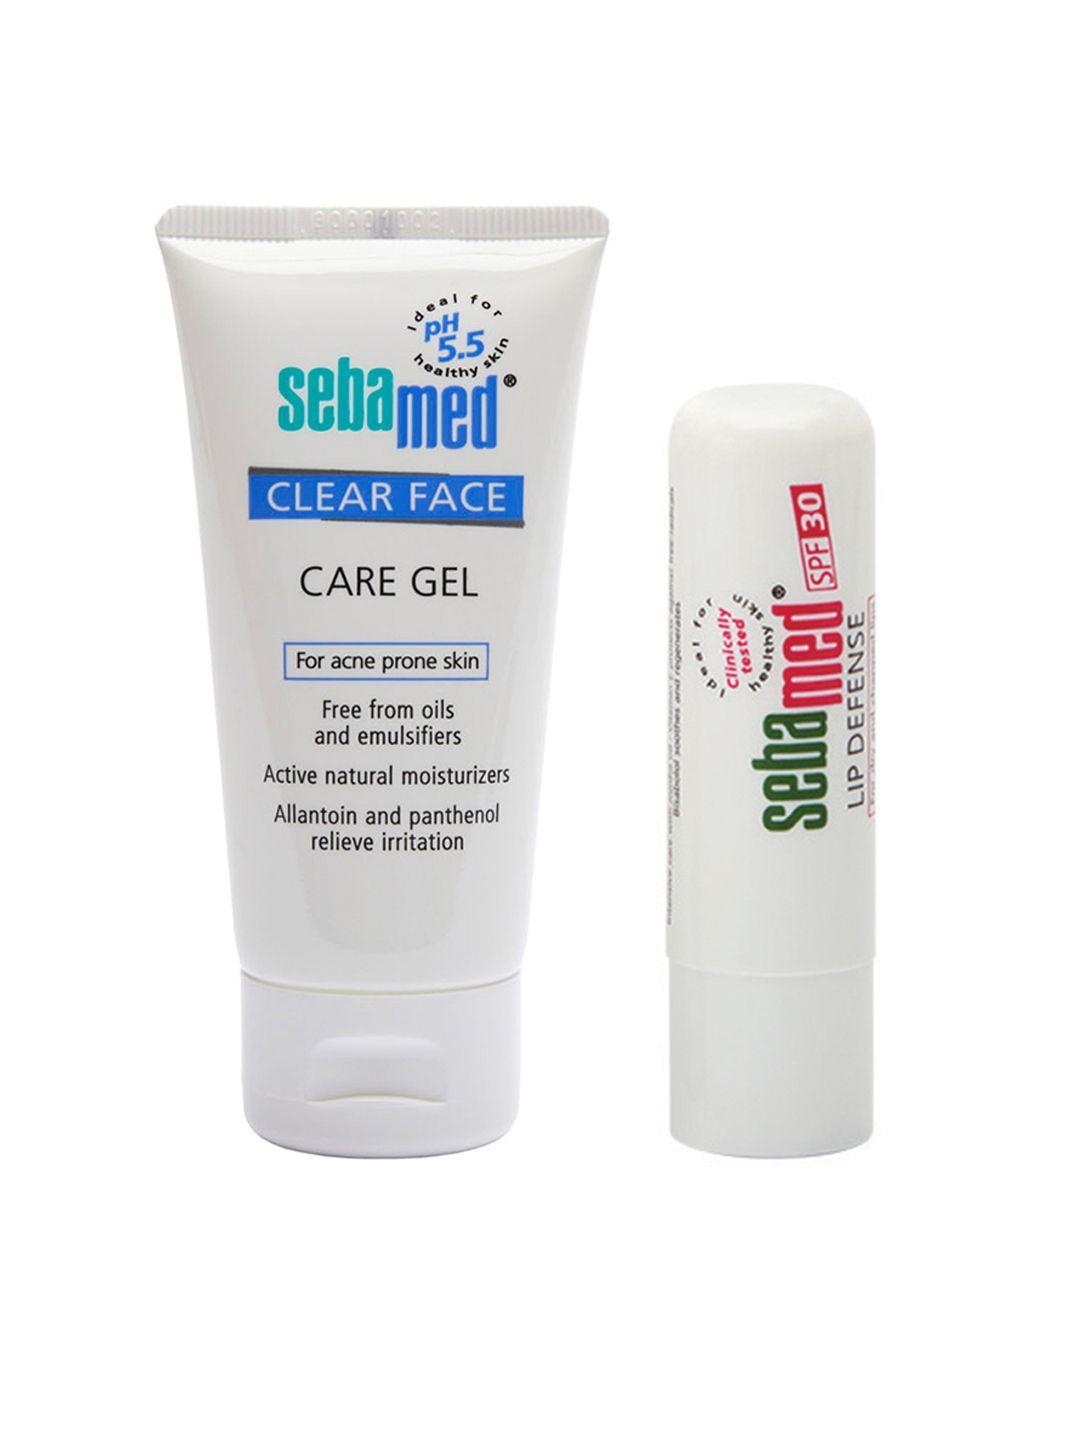 sebamed set of clear face care gel & lip defense